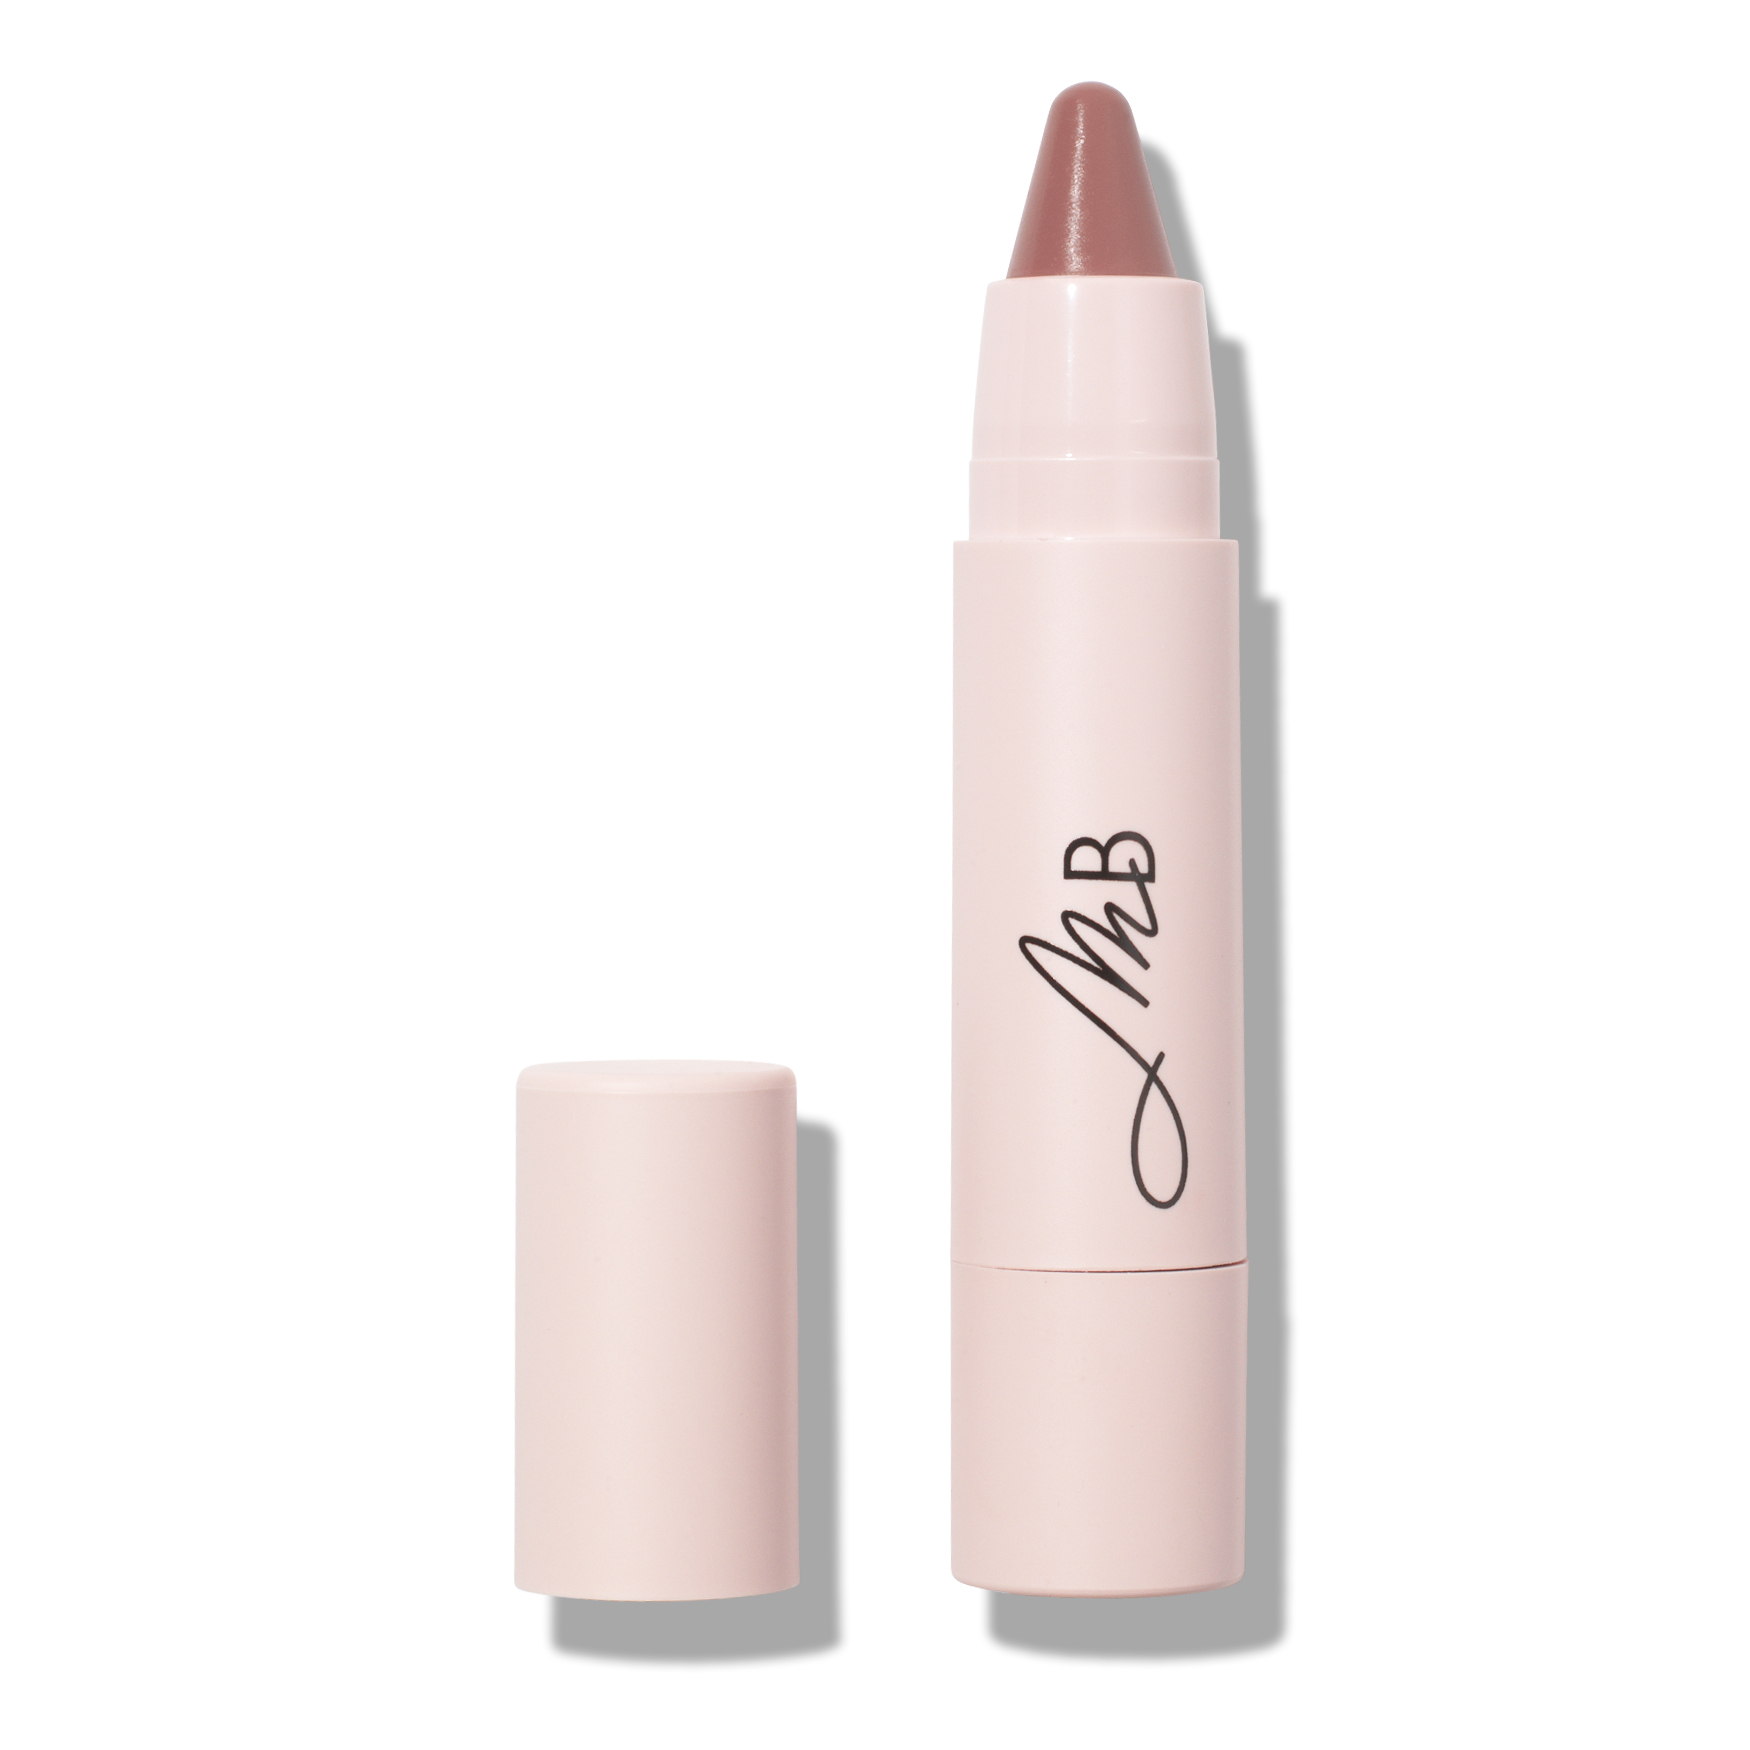 Monika Blunder Beauty Kissen Lush Lipstick Crayon | Space NK